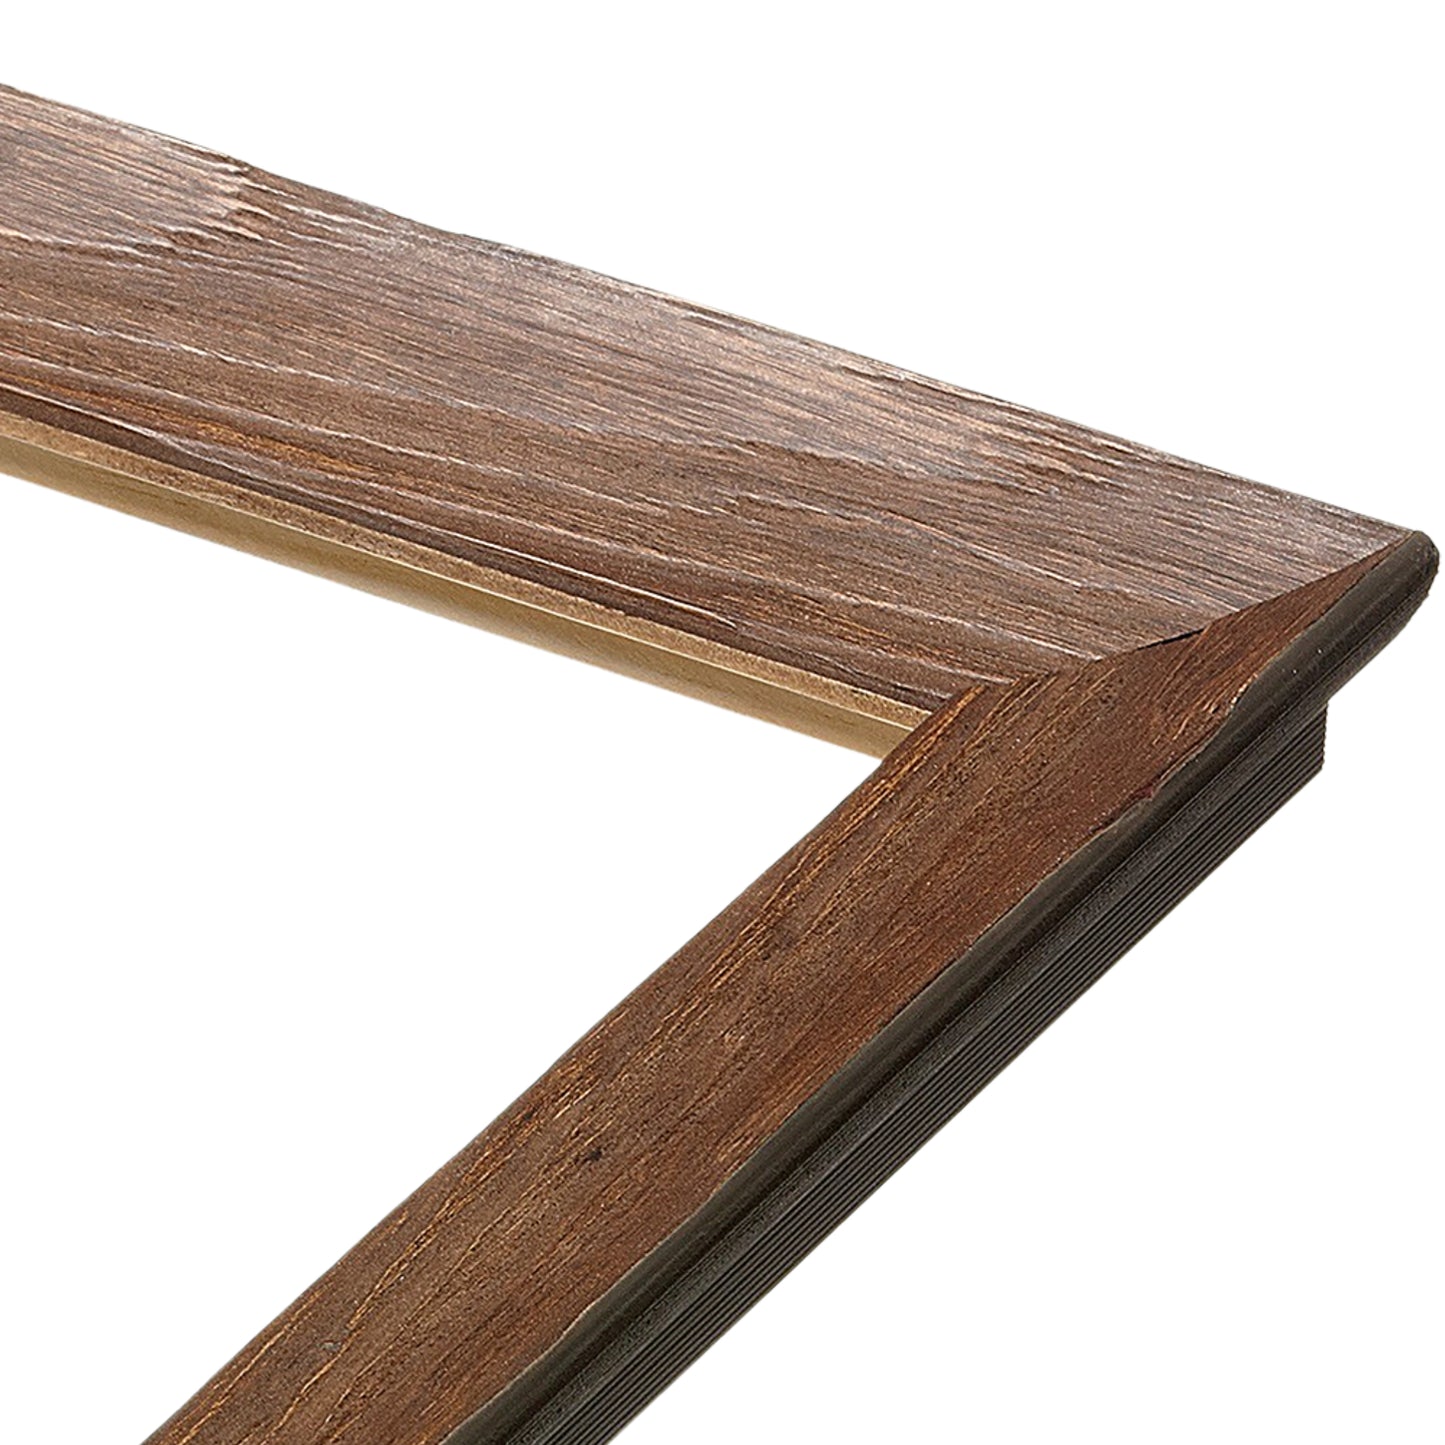 Light Smoked Pine Medium Width Table Top Frame